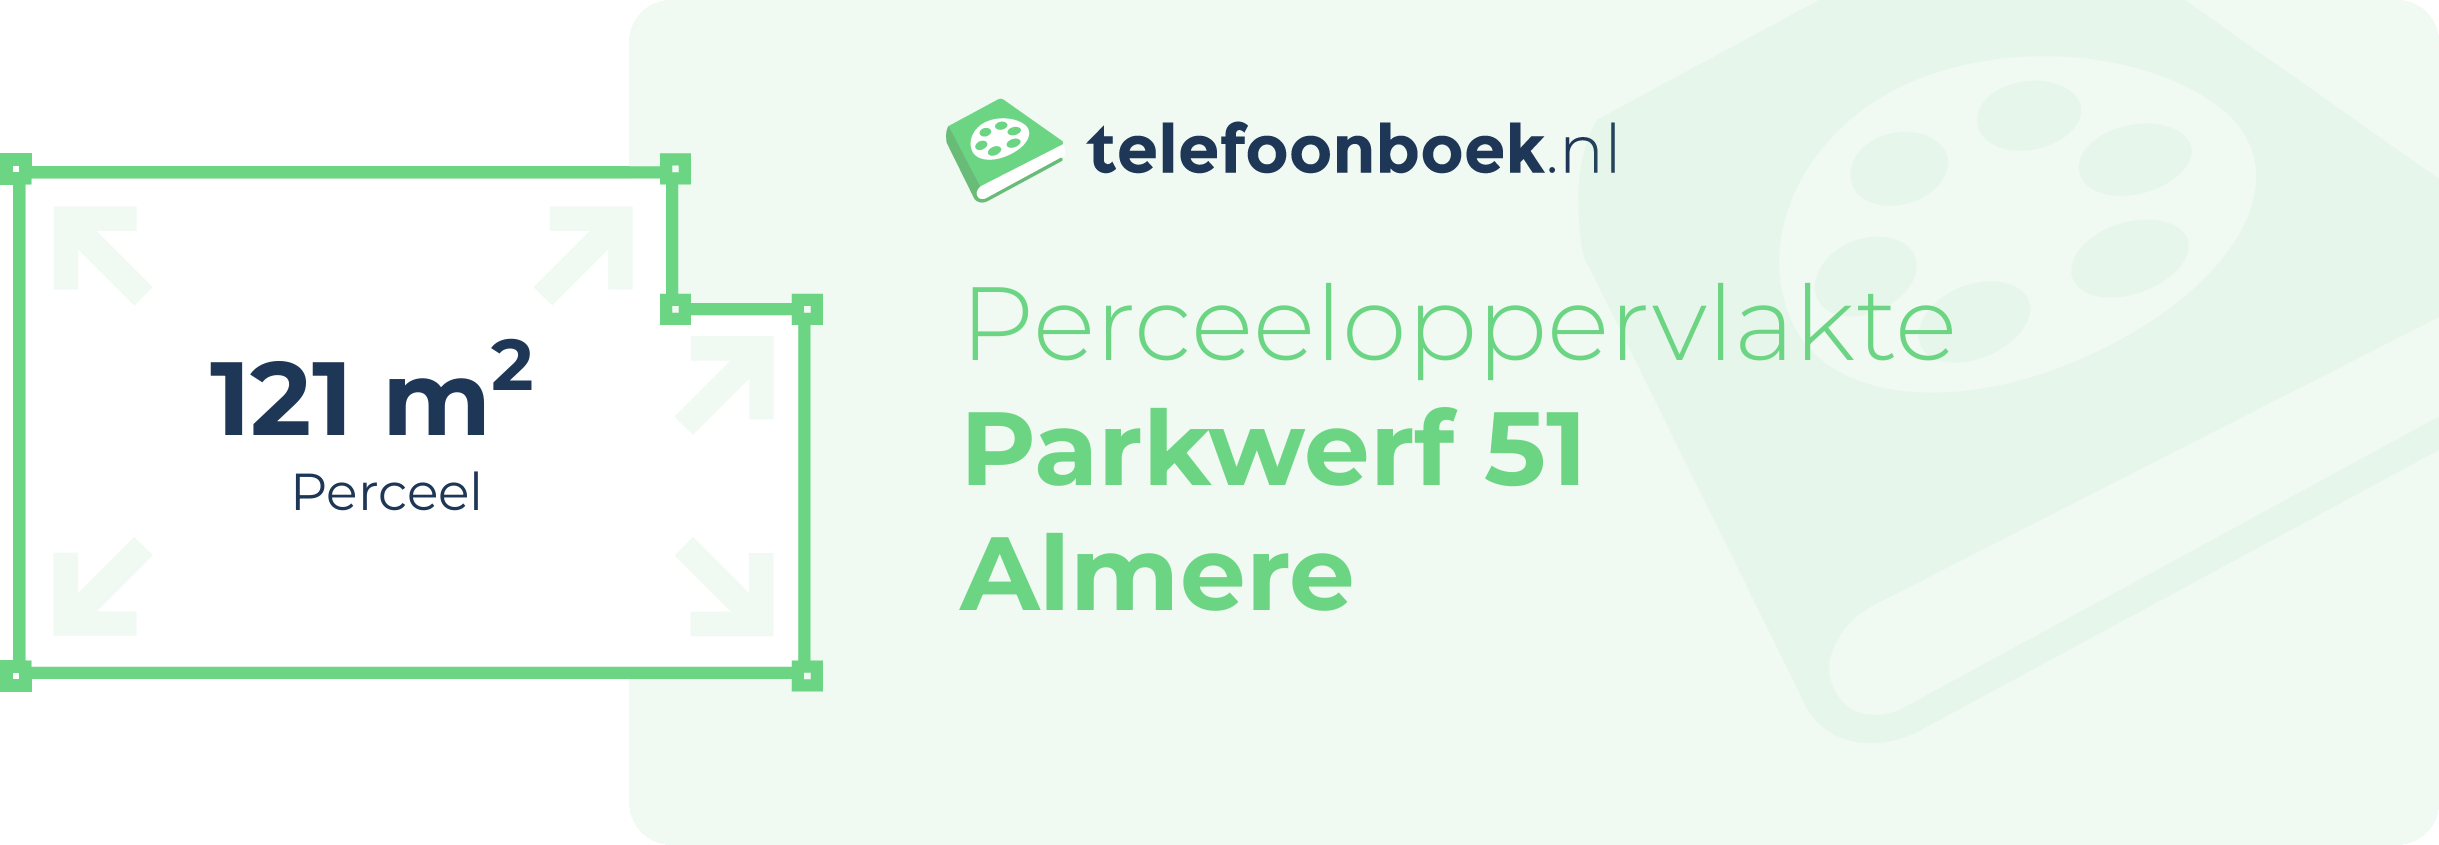 Perceeloppervlakte Parkwerf 51 Almere